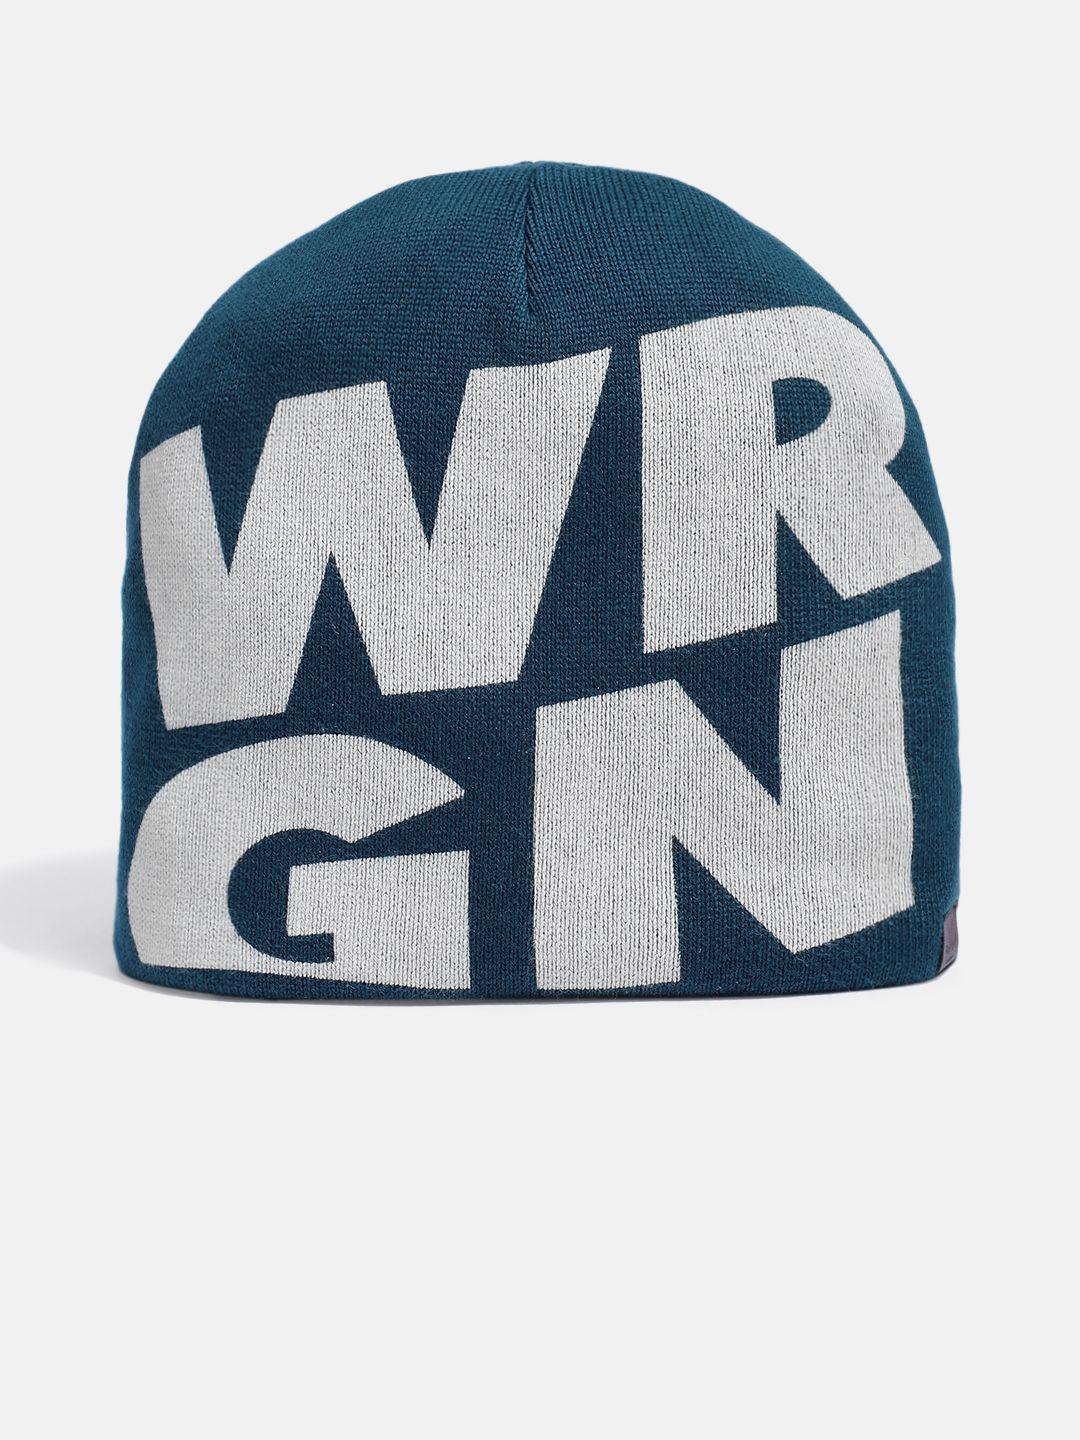 wrogn unisex blue & white solid acrylic beanie cap